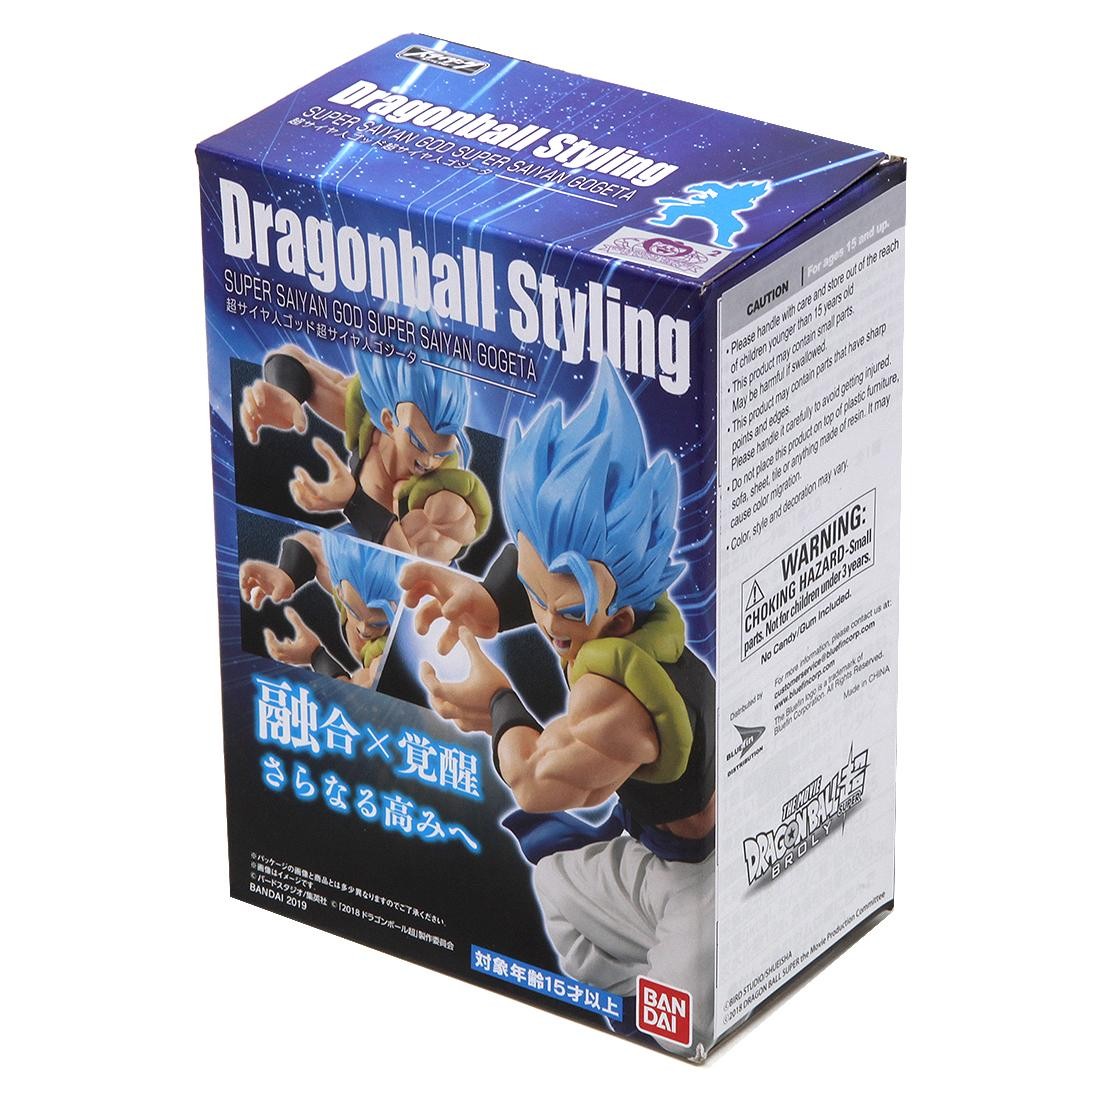 6 Super Saiyan God Gogeta Figure Details about   Bandai Dragon Ball Styling Vol